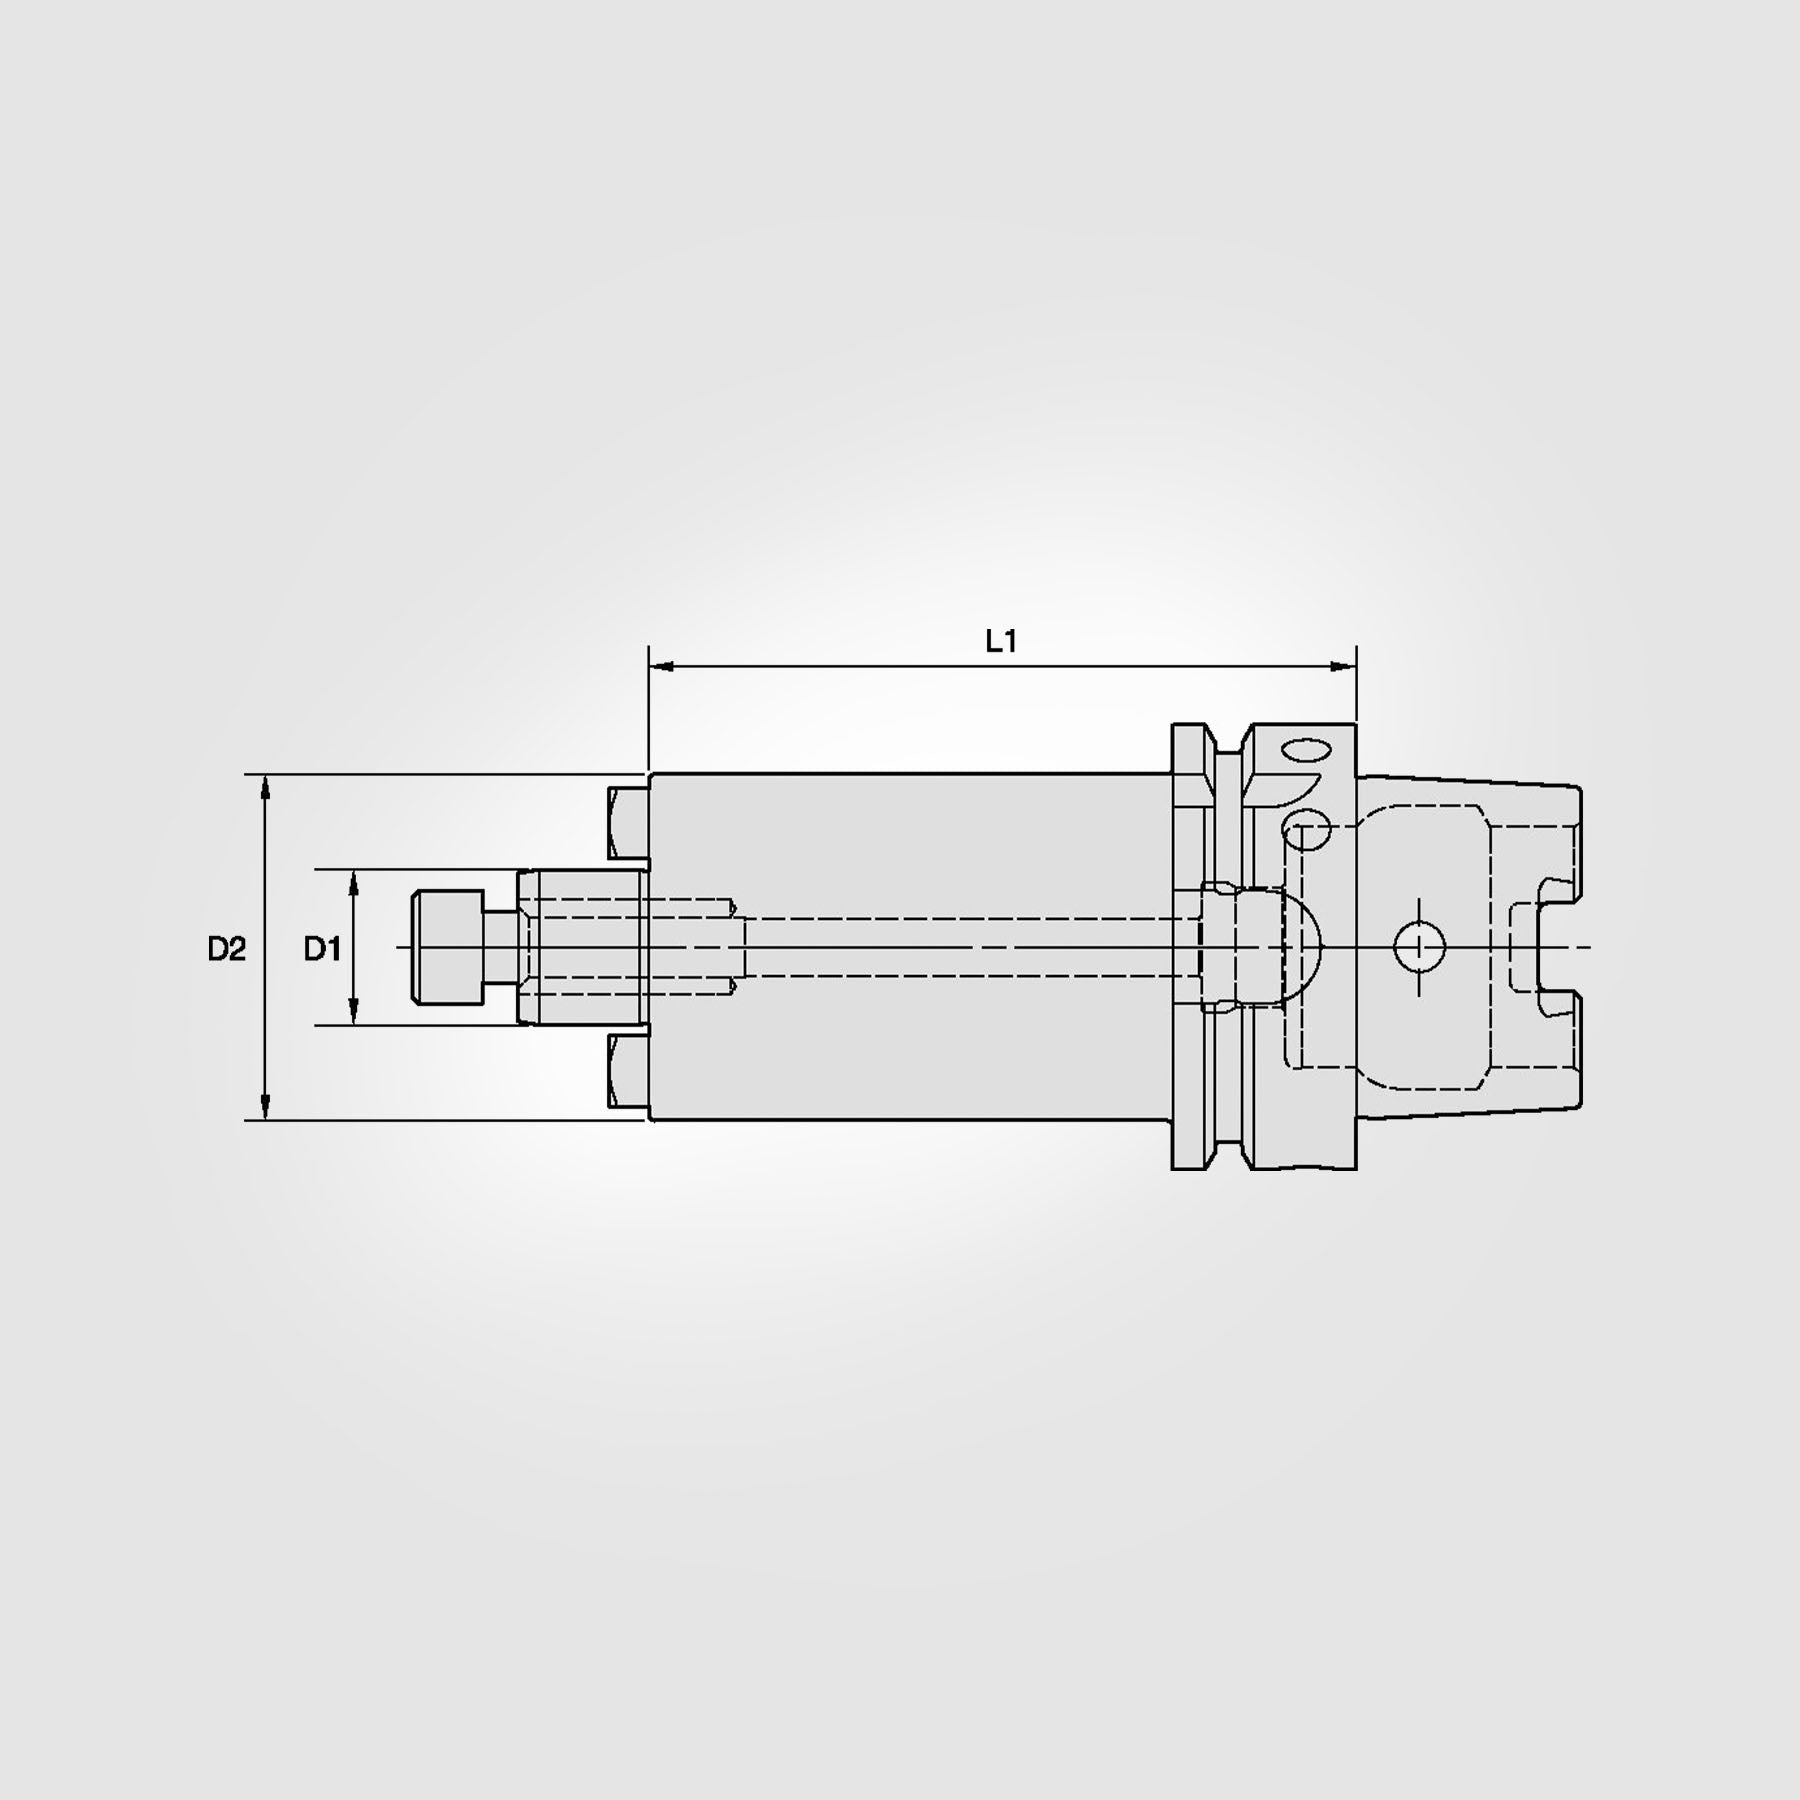 HSK100A Taper Shank 40mm Shell Mill Adapter (THROUGH COOLANT) | 3872509